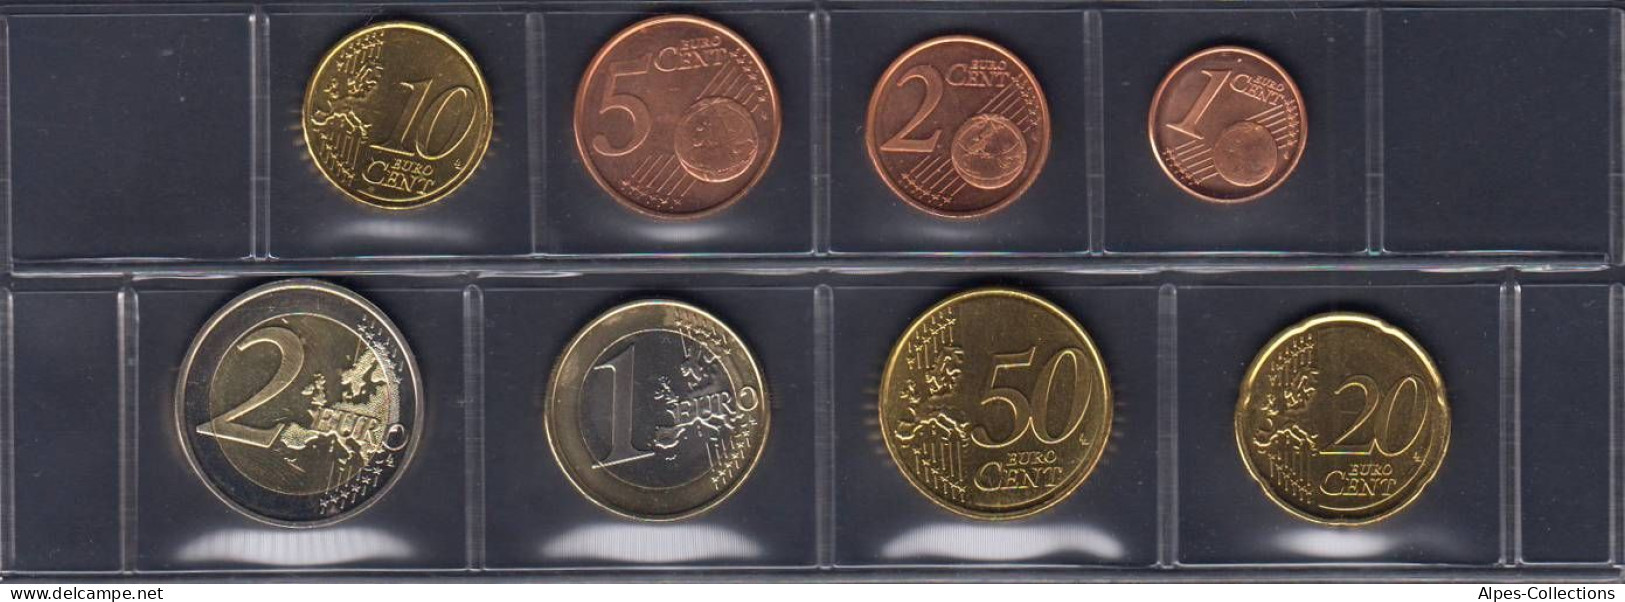 FIX2009.3 - SERIE FINLANDE - 2009 - 1 Cent à 2 Euros - Finlandía